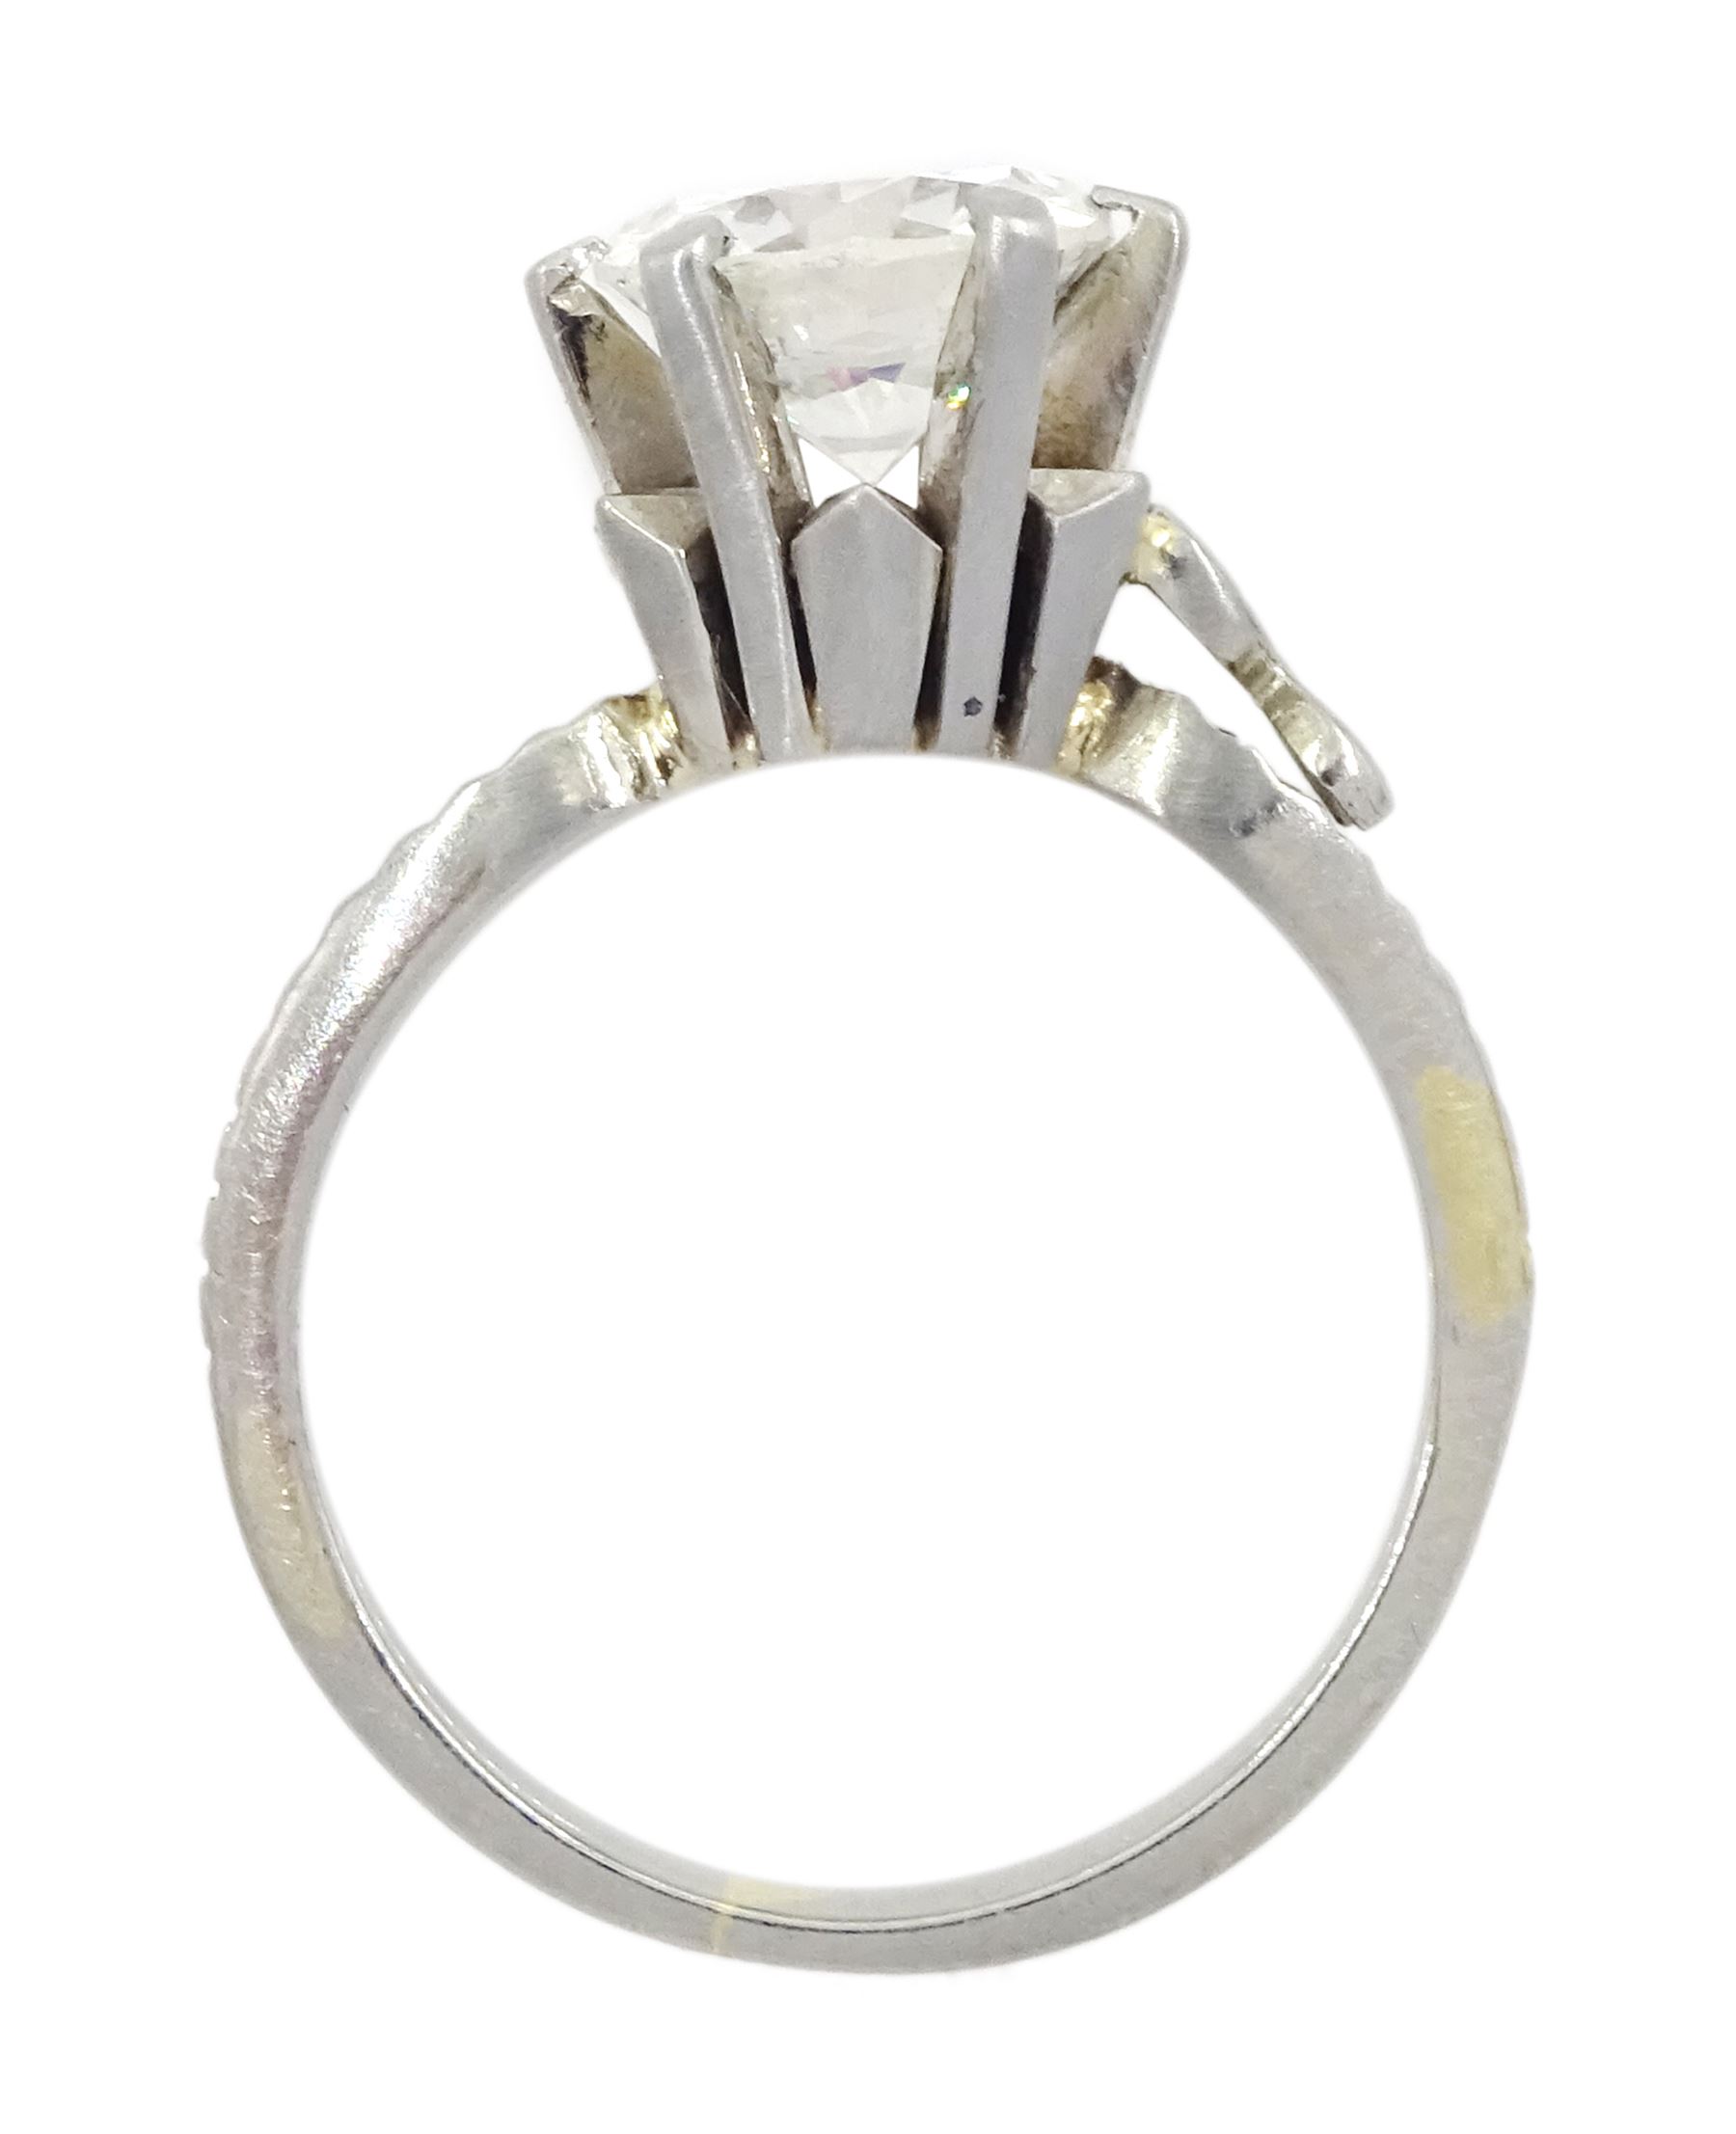 18ct white gold single stone round brilliant cut diamond ring diamond approx 1.10 carat - Image 5 of 5